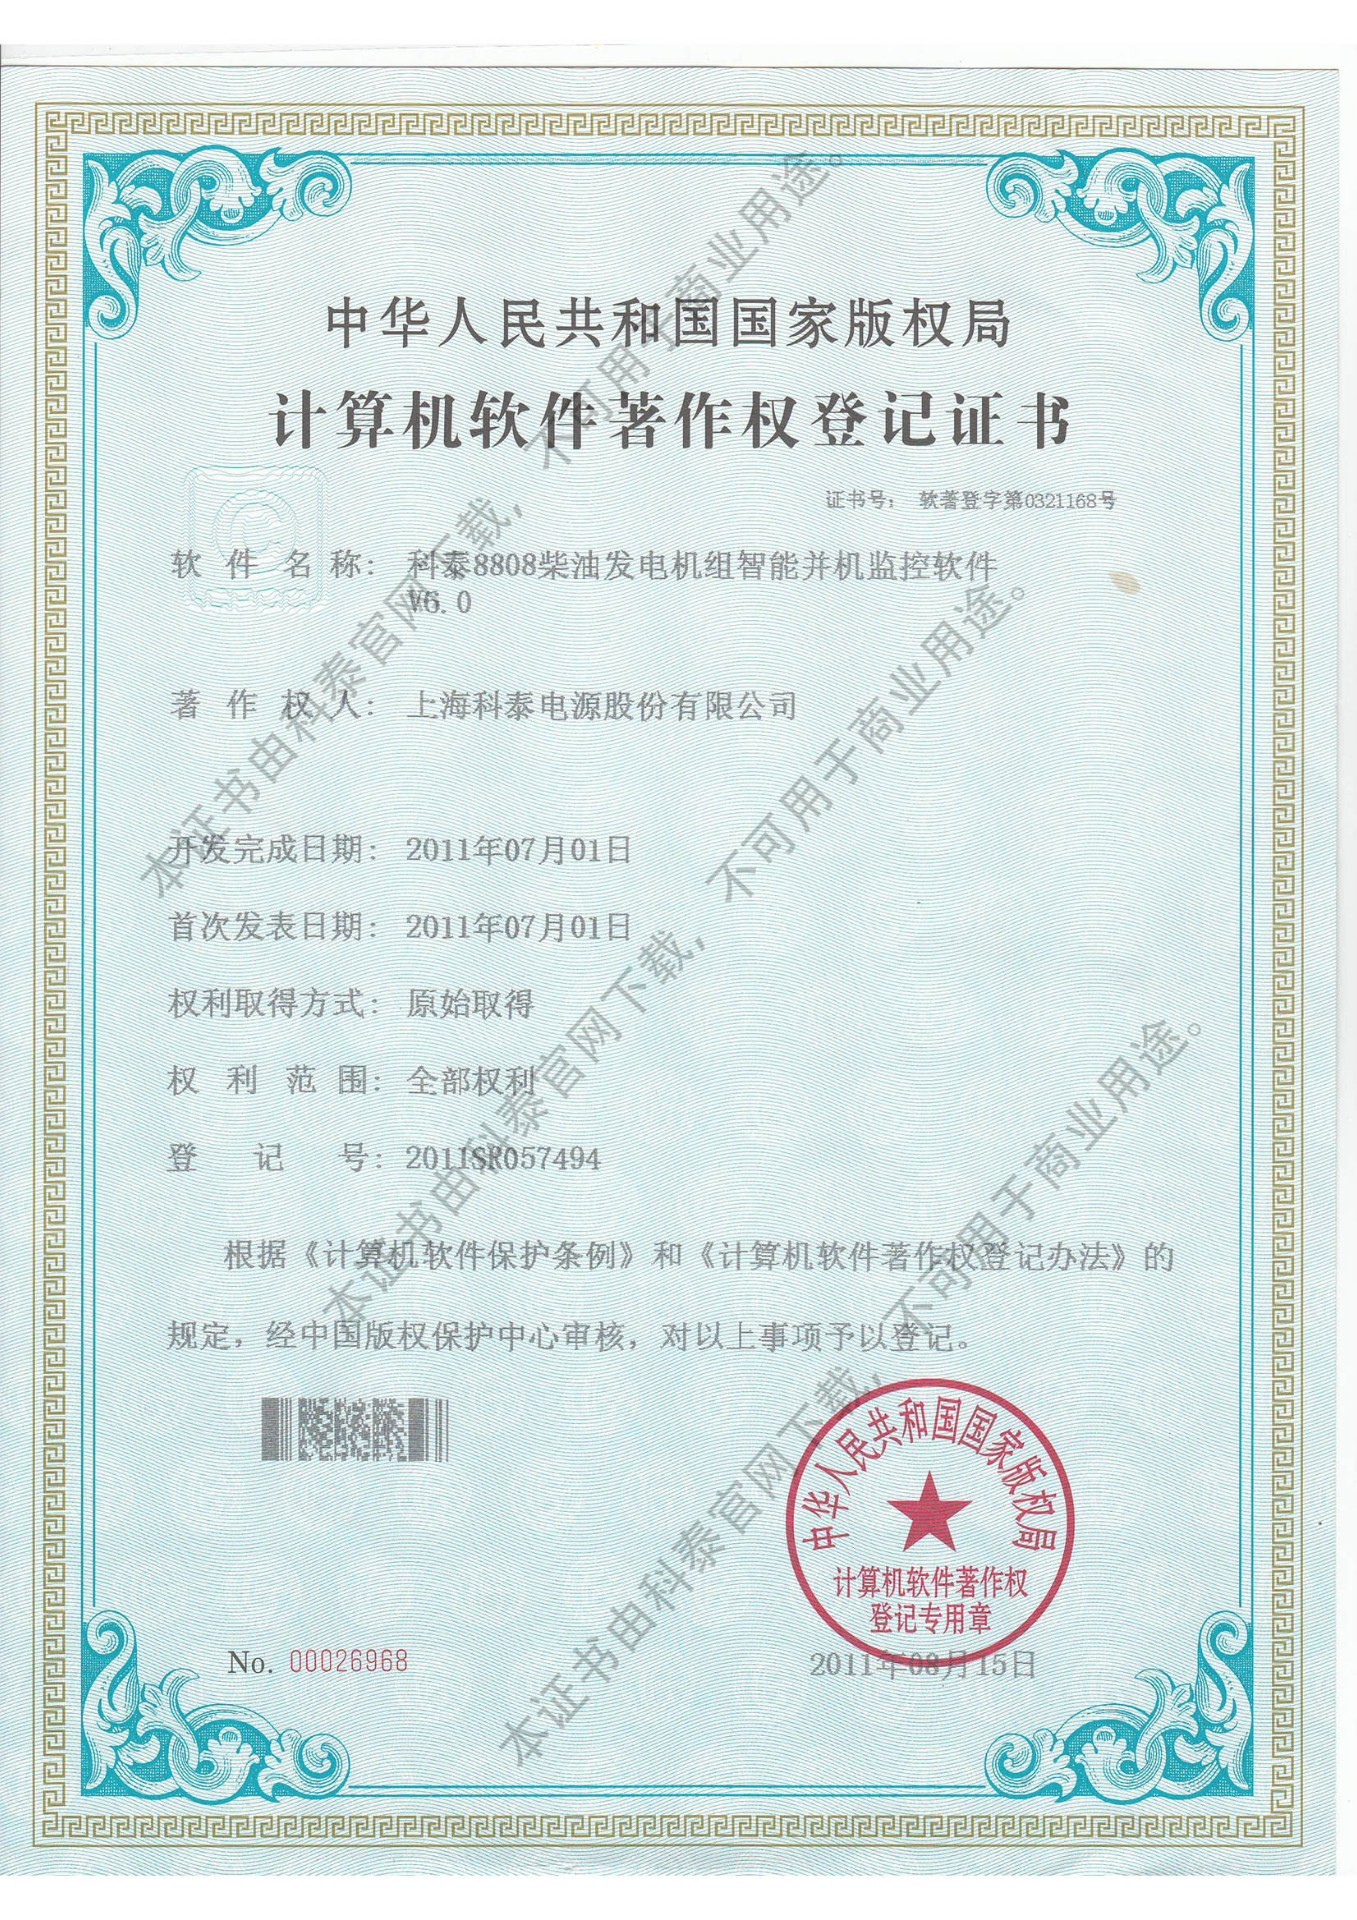 Registration certificates of computer software copyright